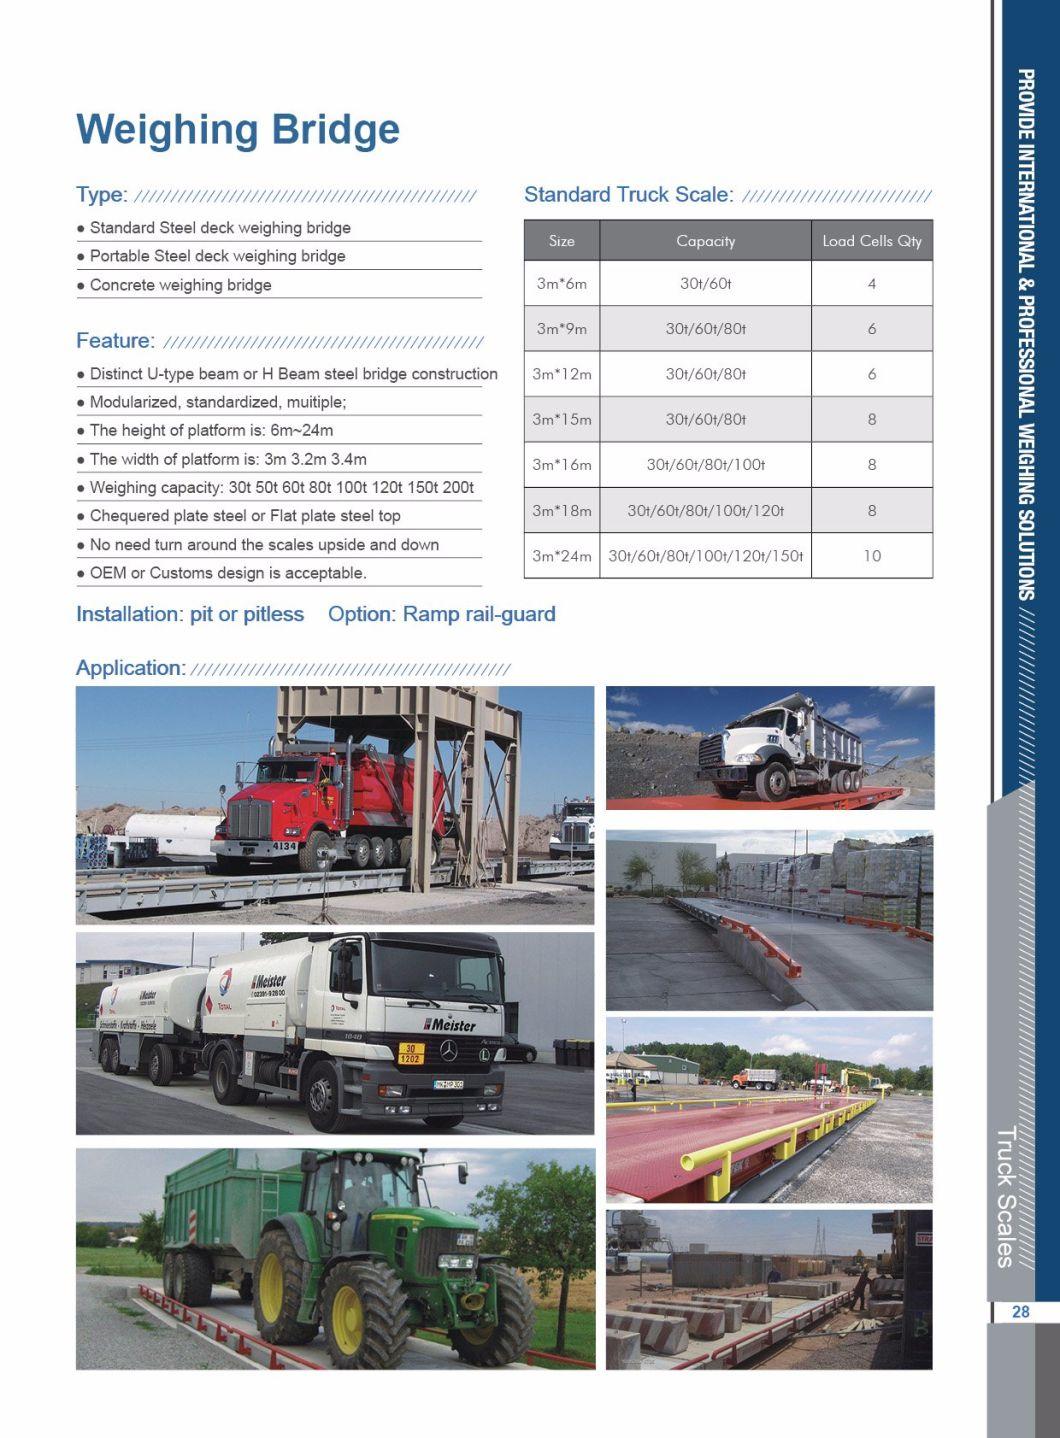 New 60 80 100 120 Ton Electronic Heavy Duty Truck Weighbridge Scale Price